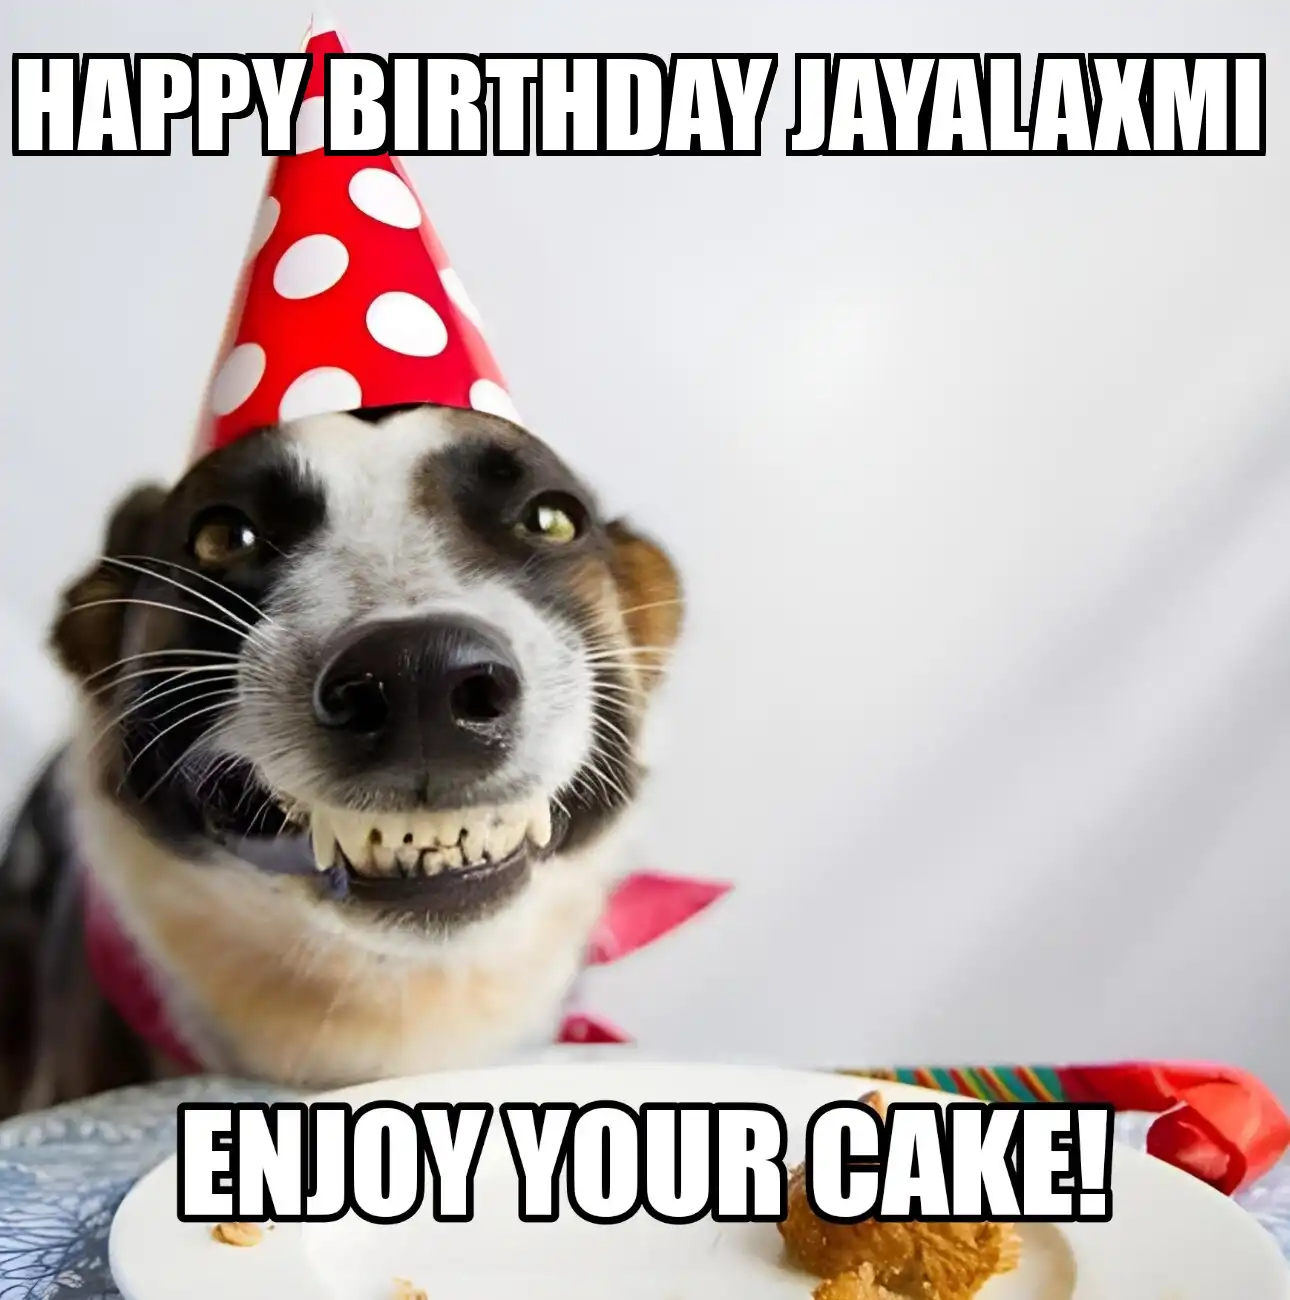 Happy Birthday Jayalaxmi Enjoy Your Cake Dog Meme